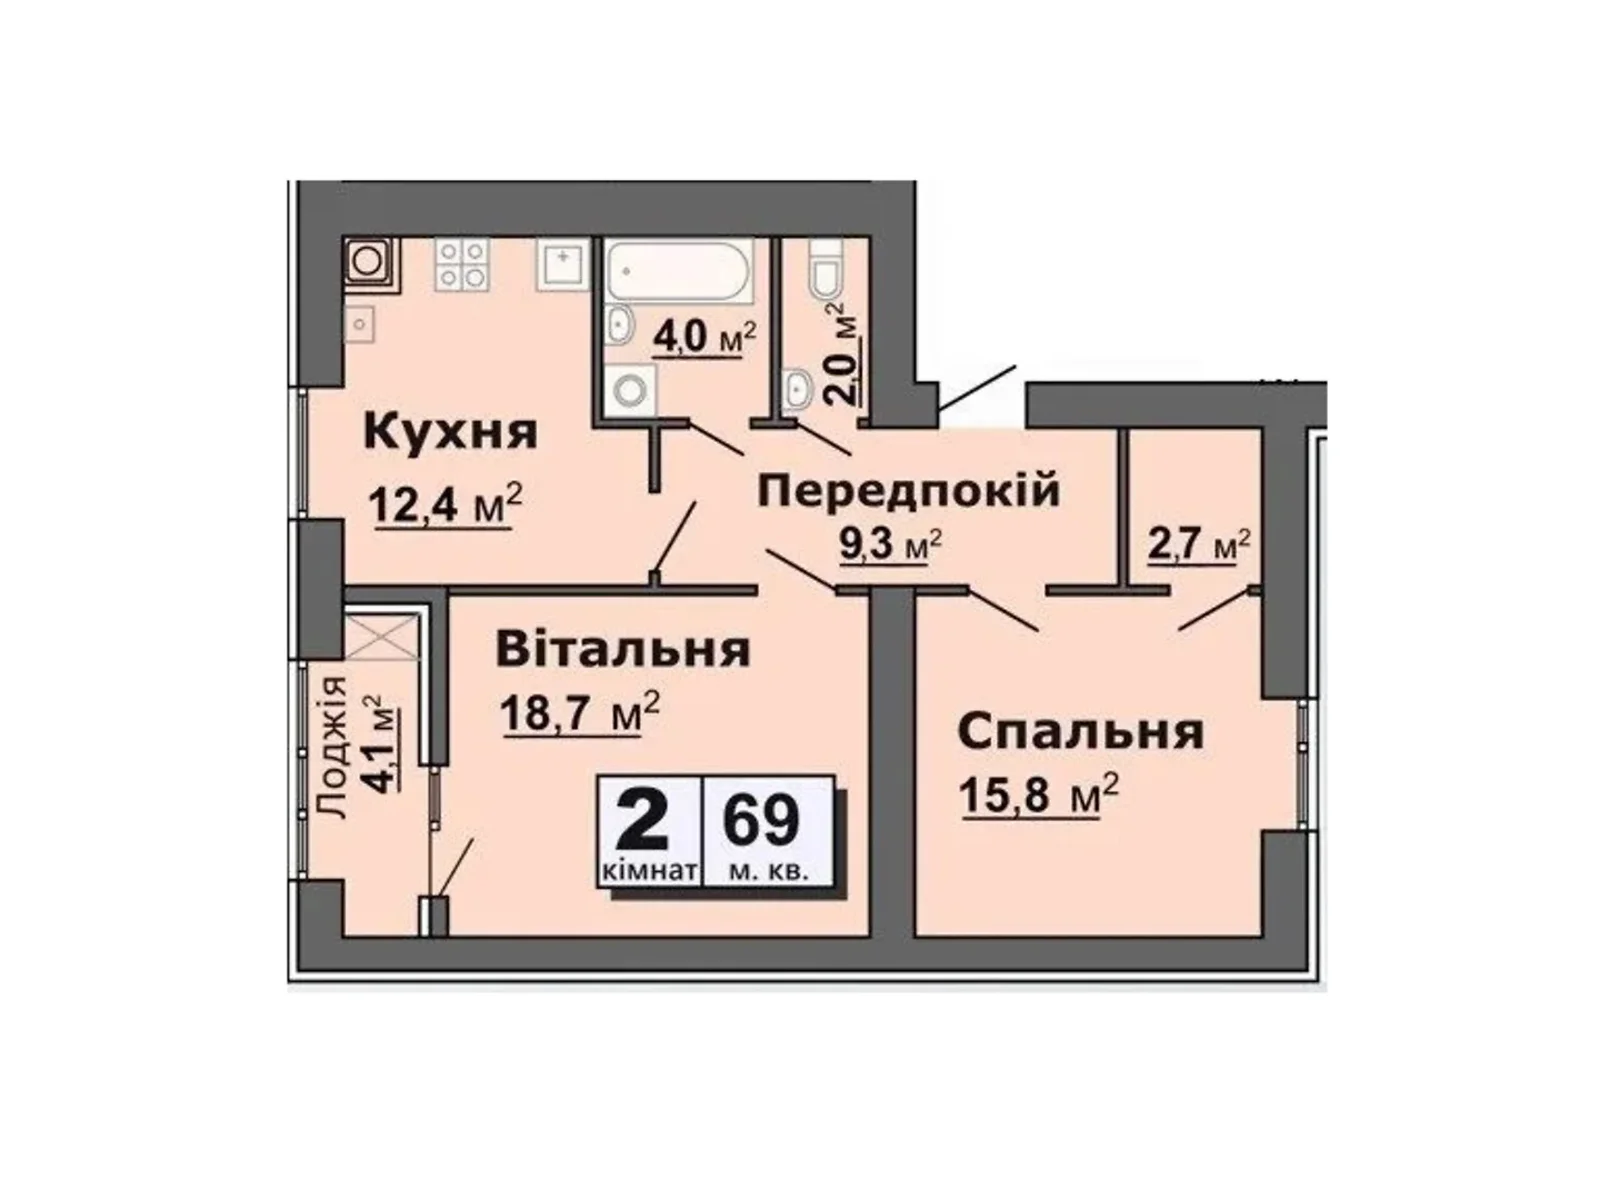 2-кімнатна квартира 69 кв. м у Луцьку, цена: 58797 $